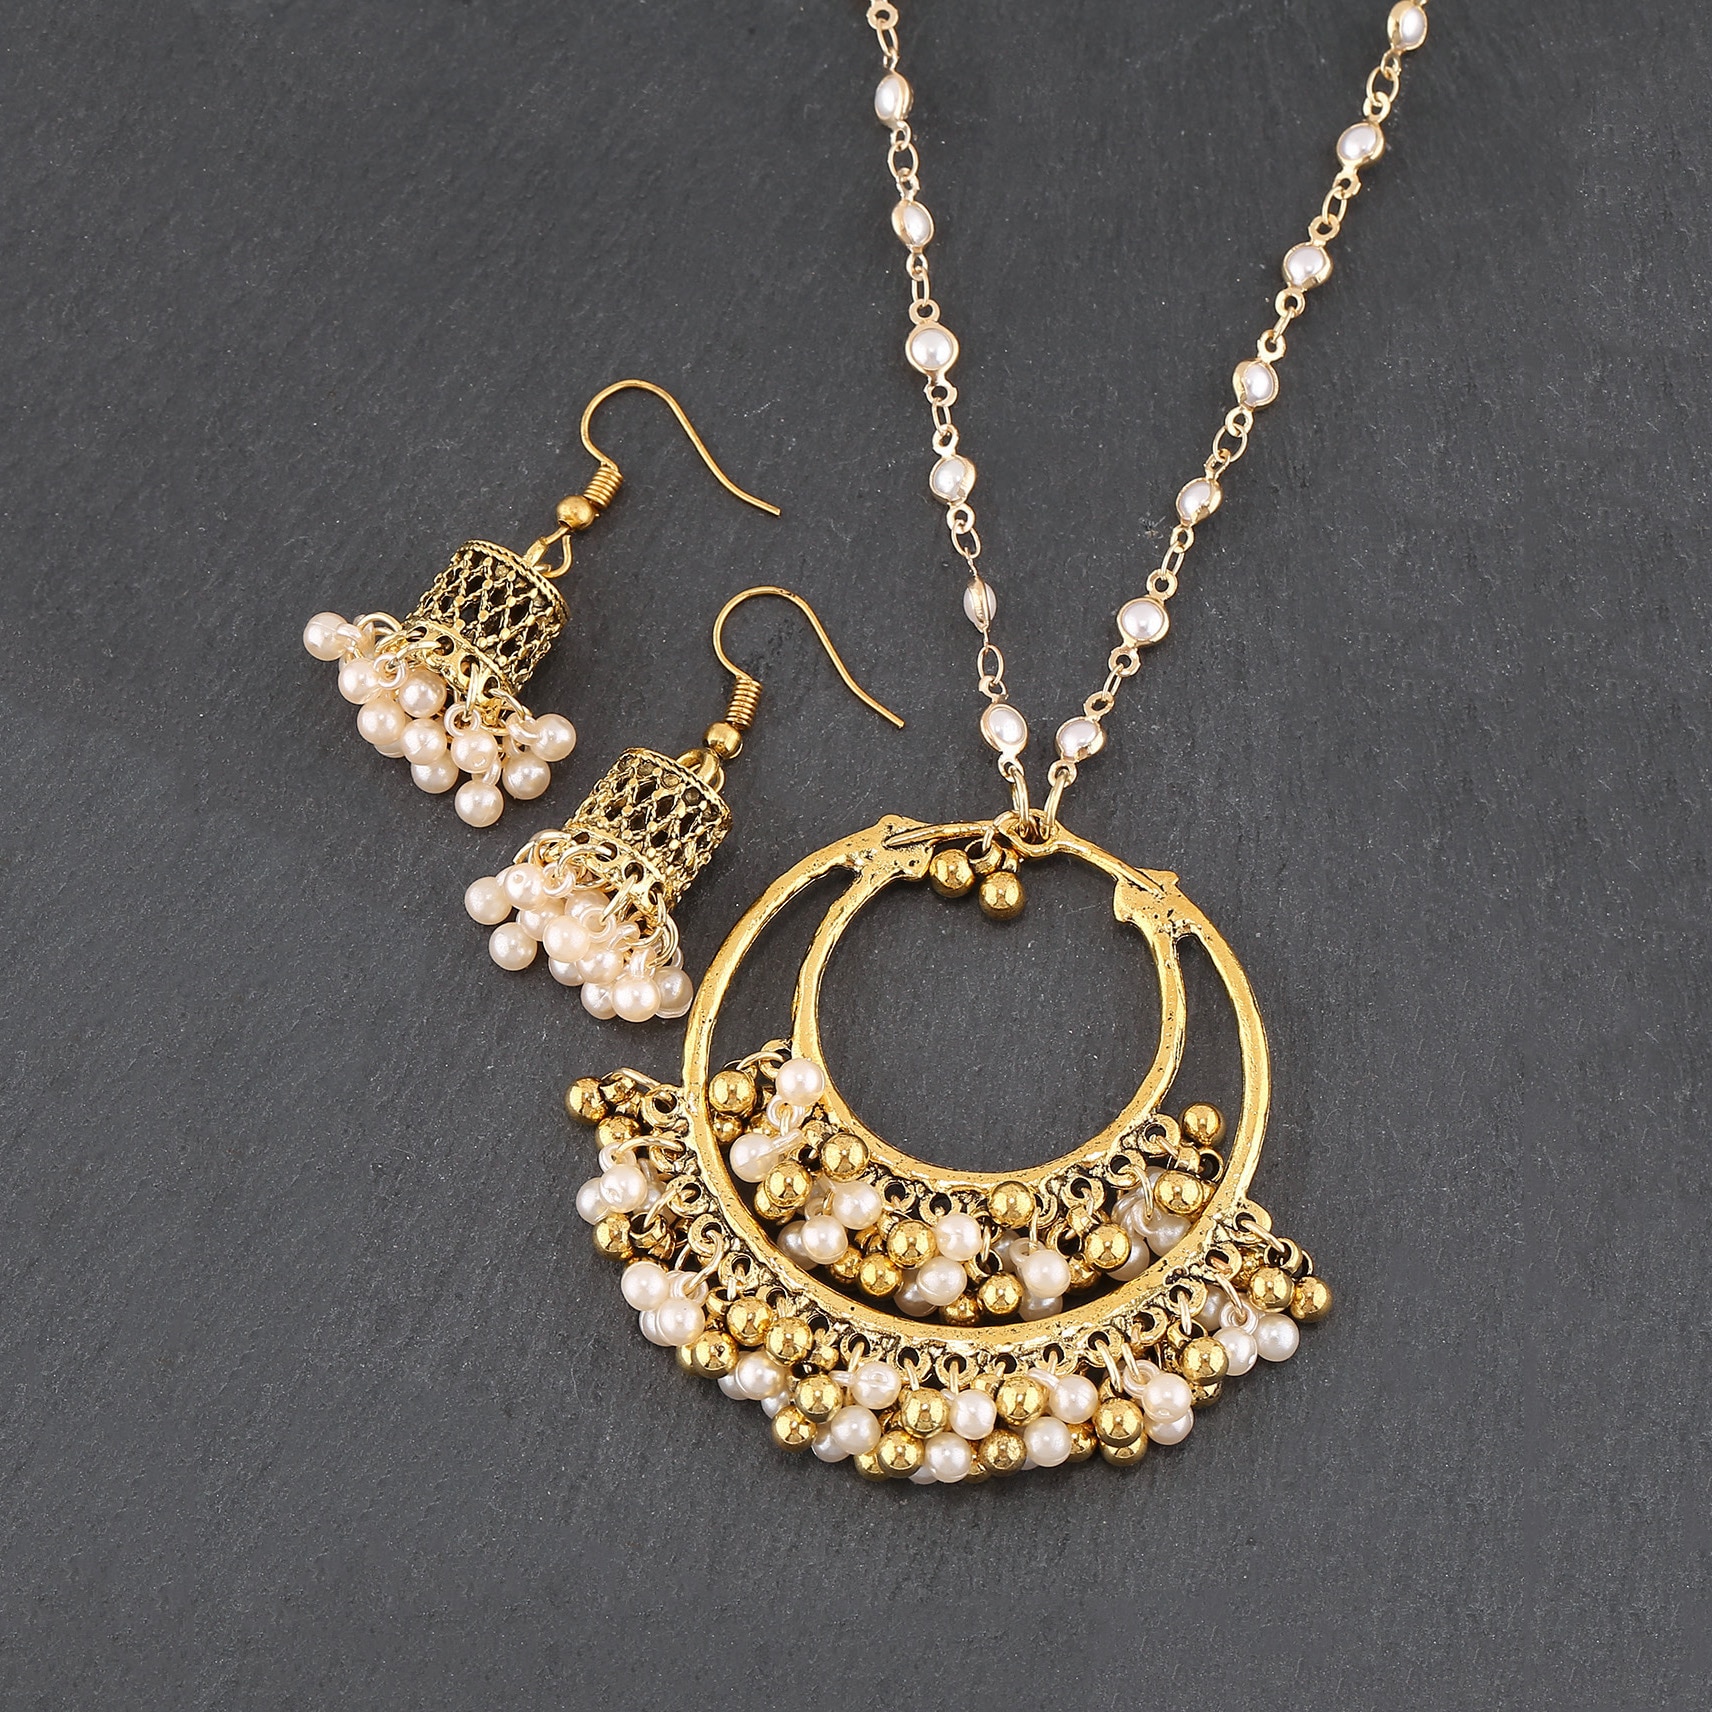 New-Women39s-Indian-Jewelry-Set-EarringNecklace-Wedding-Jewelry-Hangers-Luxury-Retro-Red-CZ-Geometry-3256804349980623-5